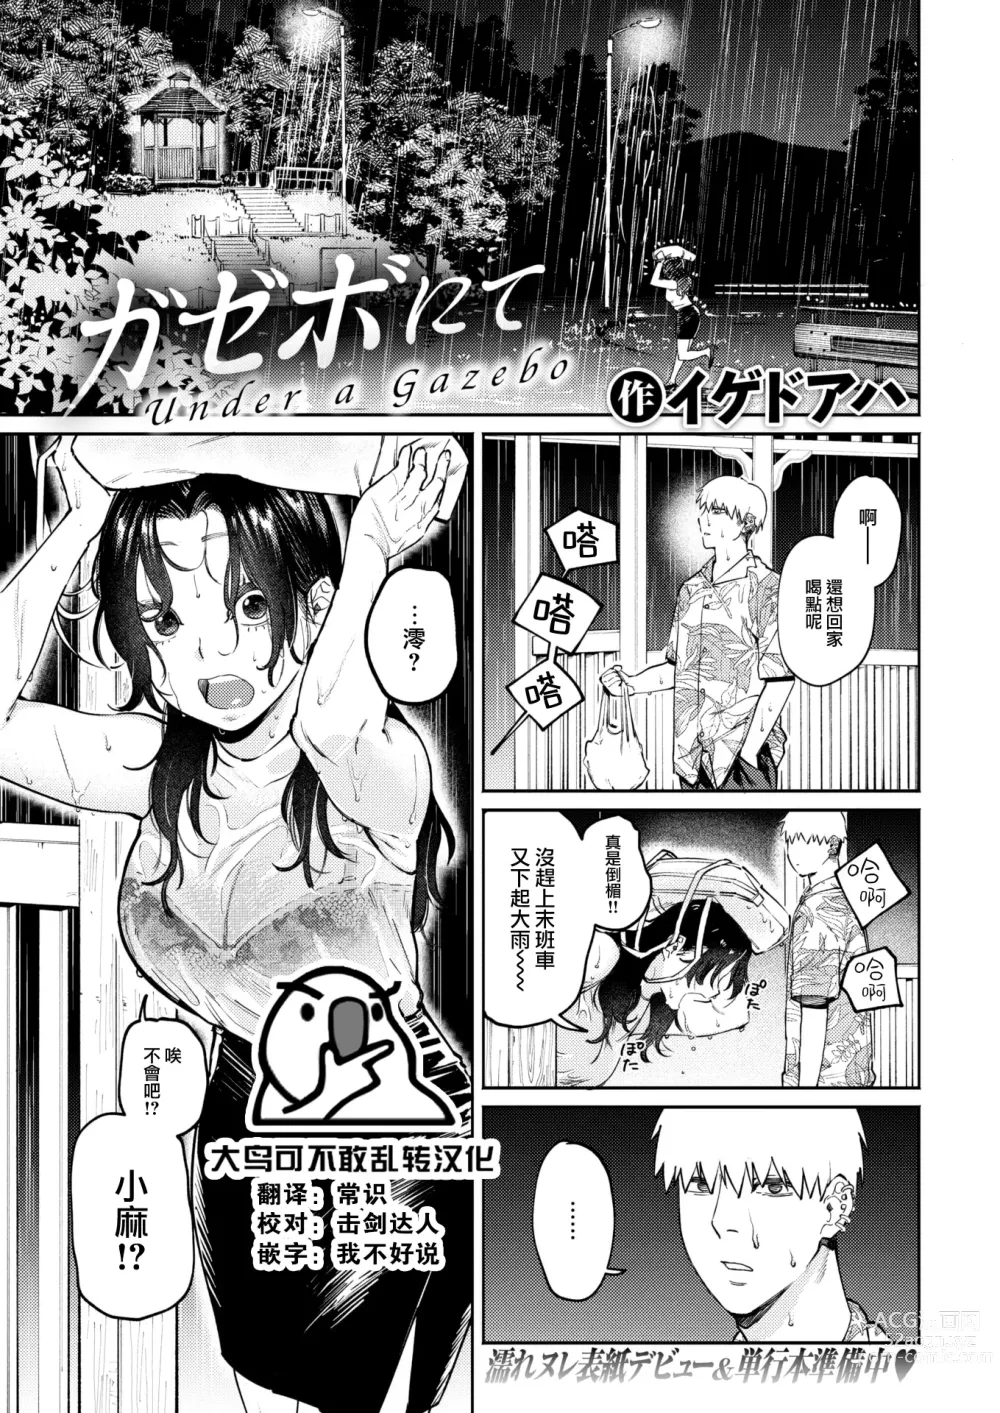 Page 3 of manga Gazebo nite - Under a Gazebo